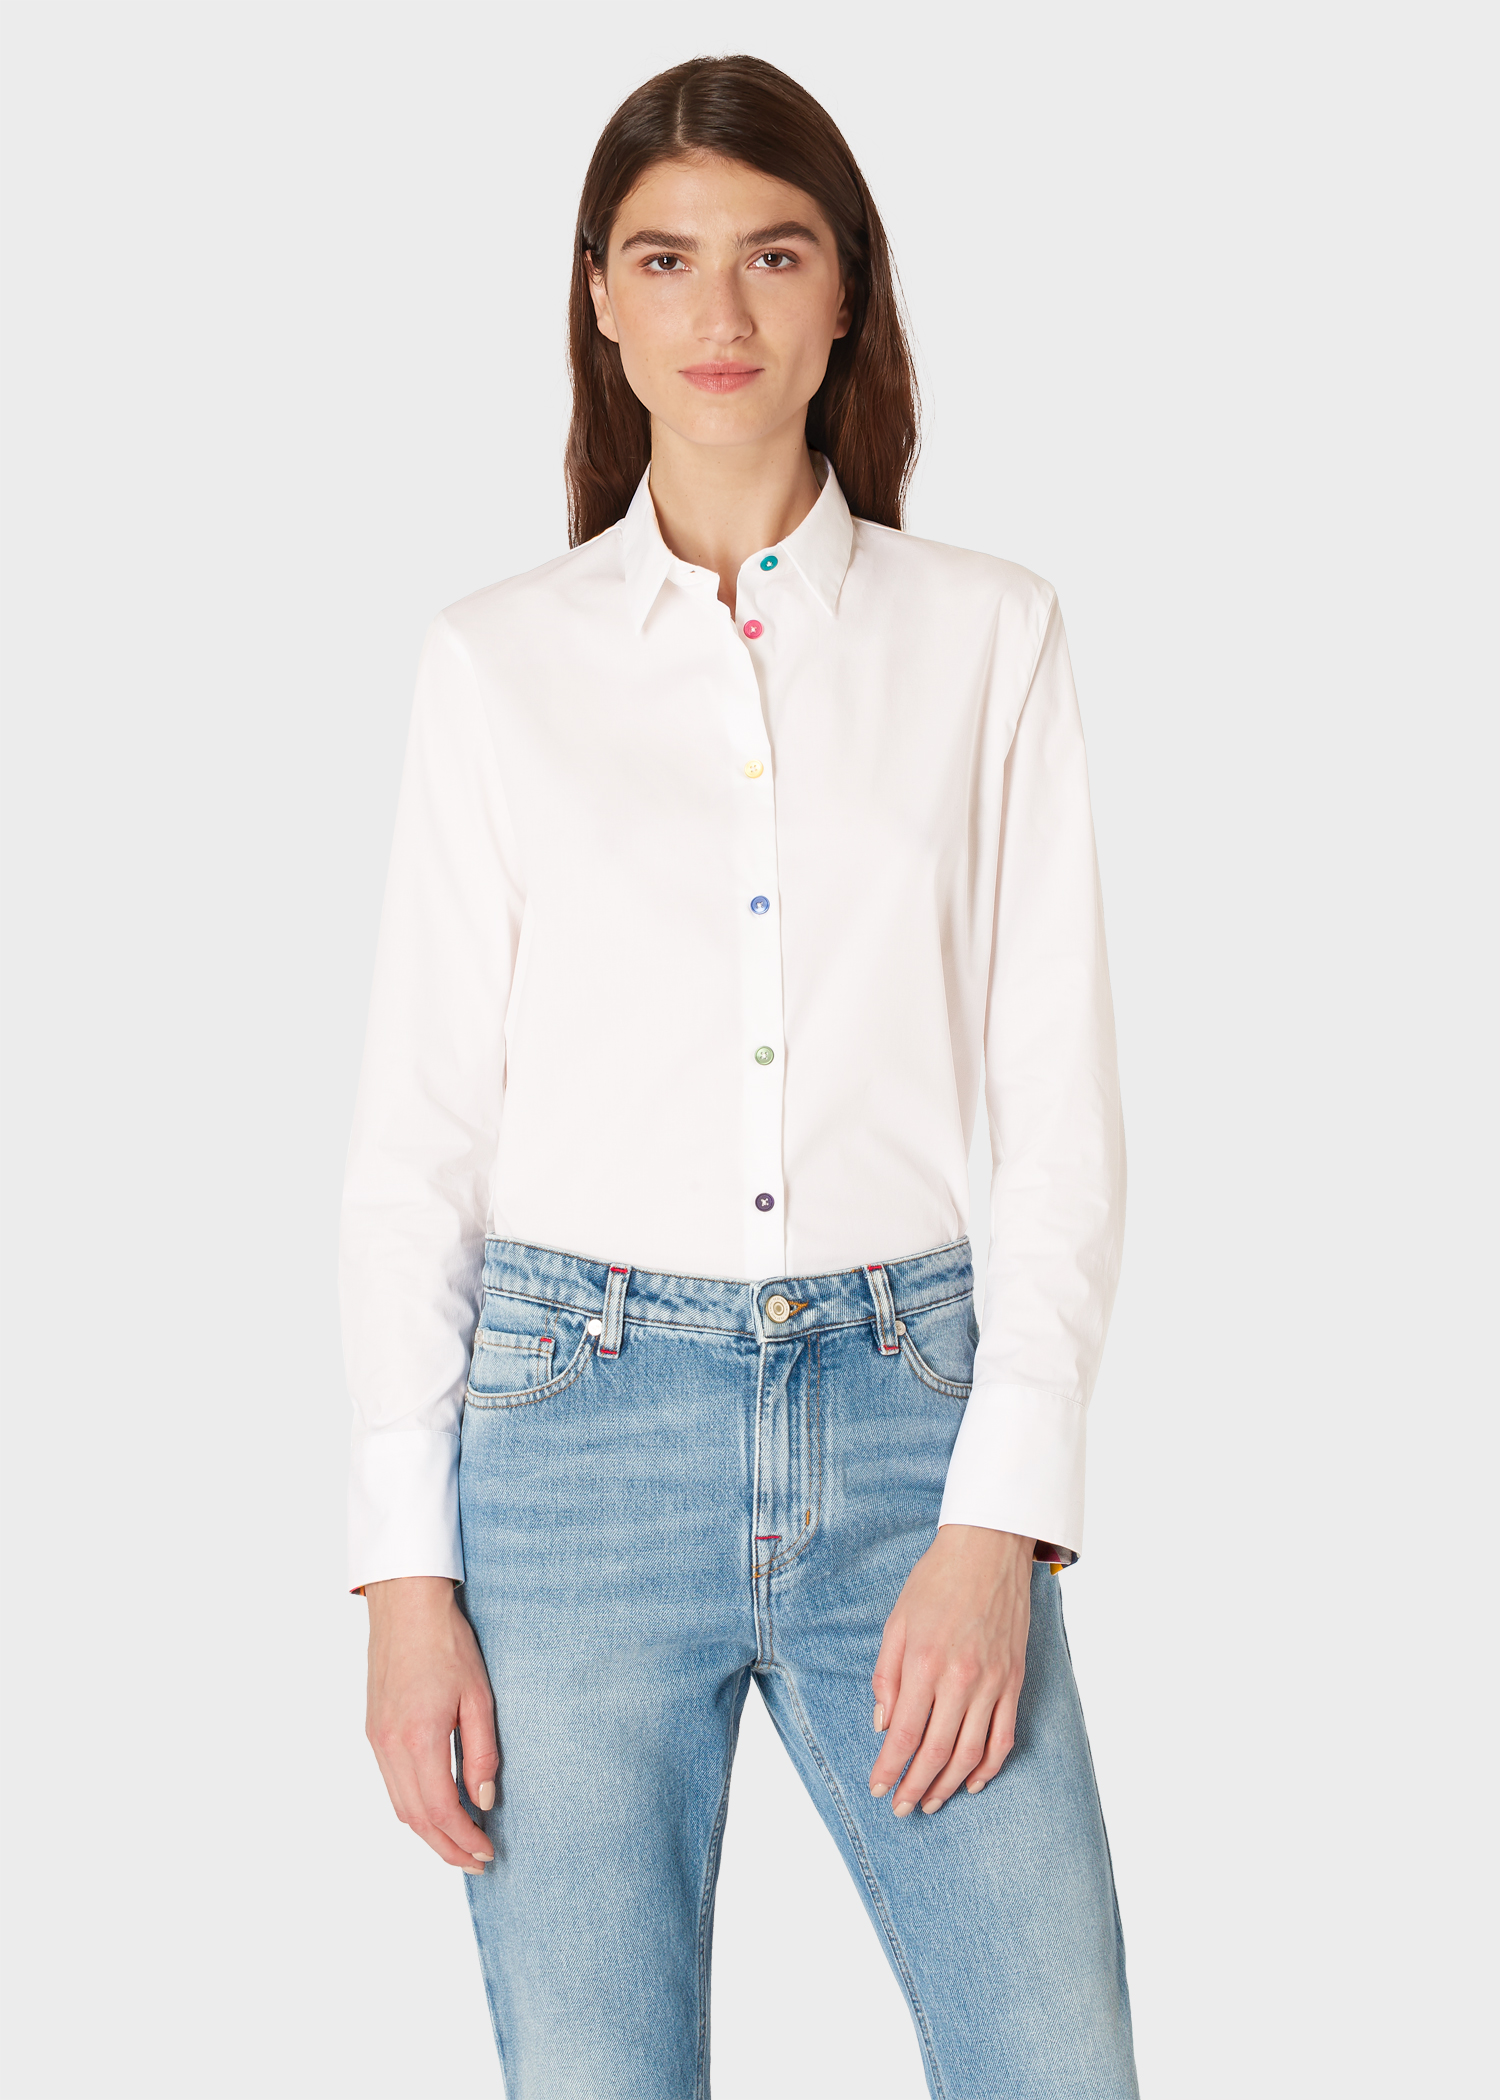 Women's White Stretch-Cotton Shirt With 'Swirl' Cuff Lining